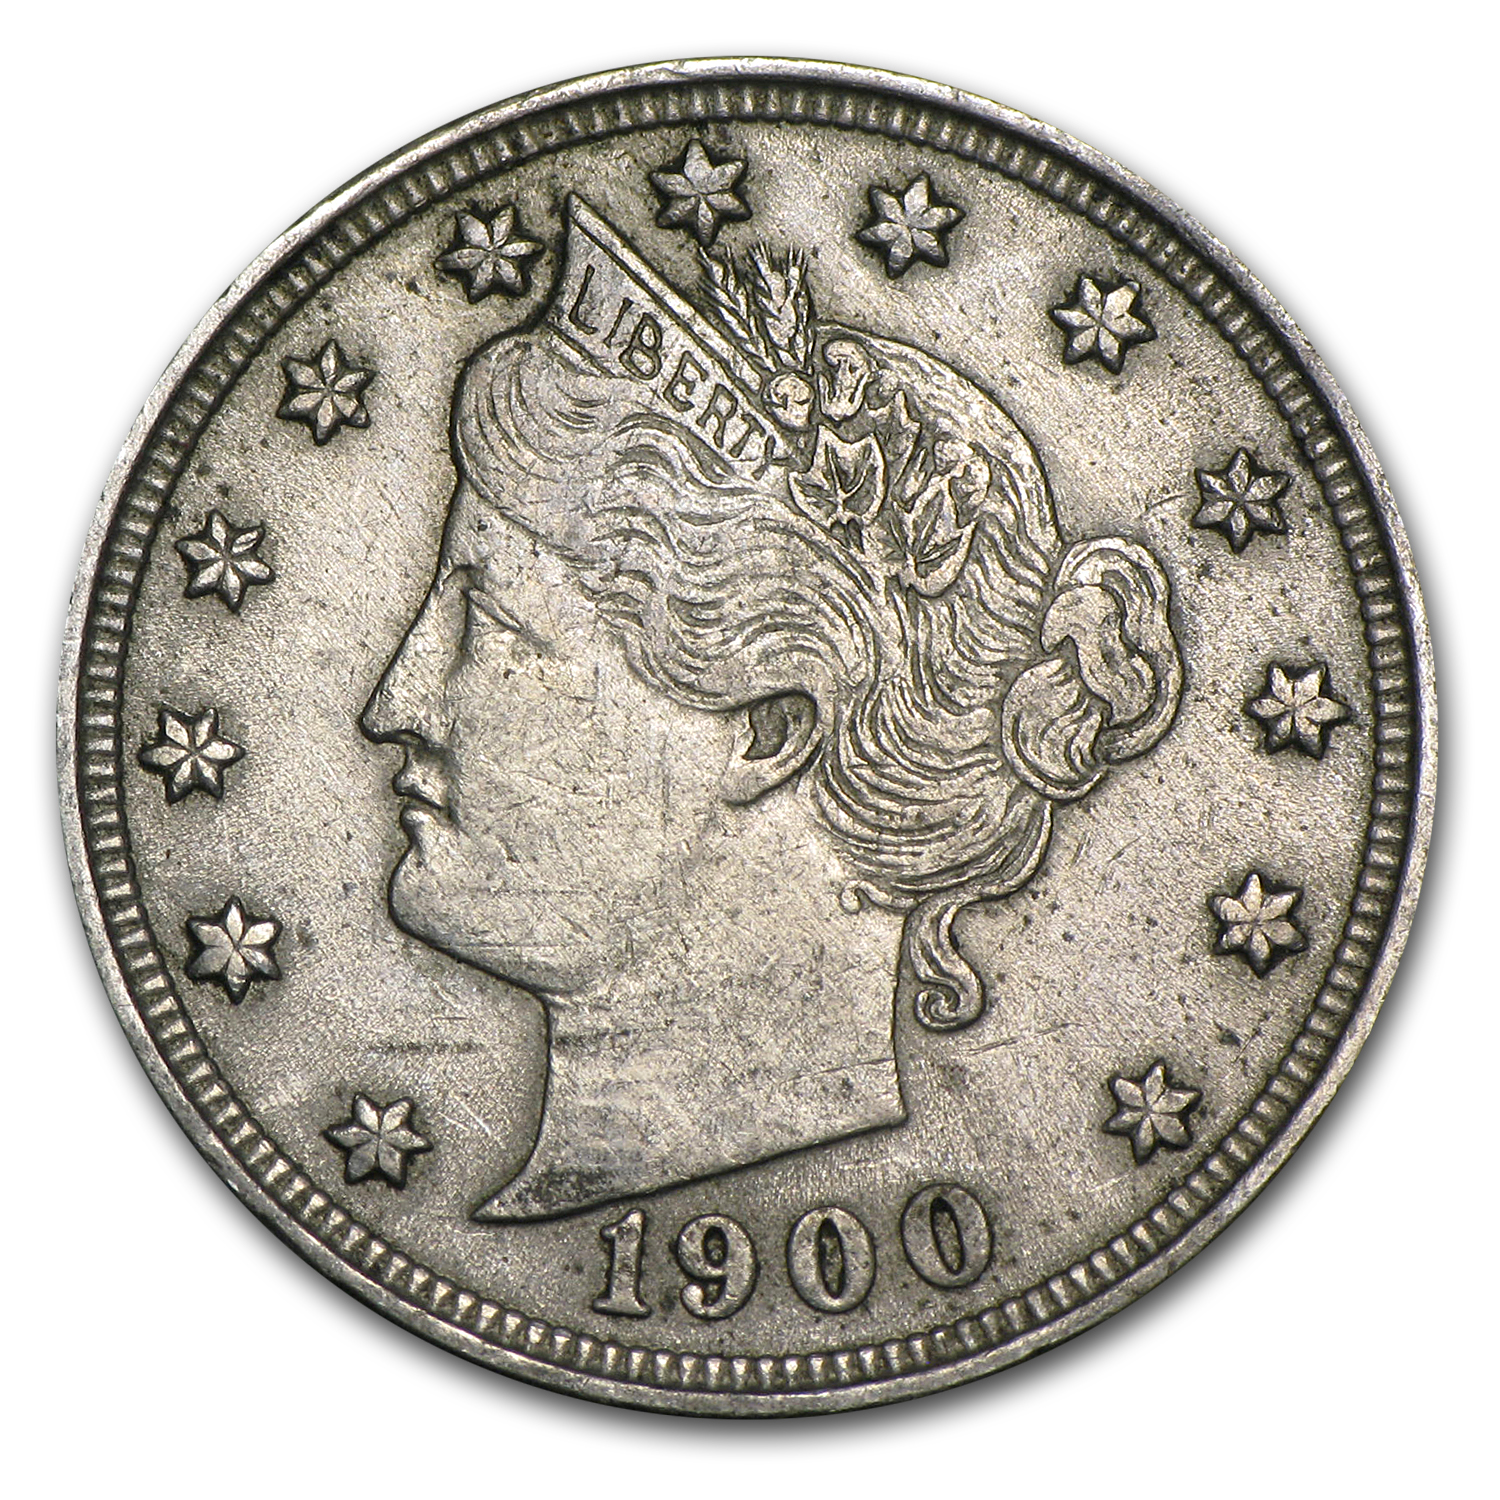 Buy 1900 Liberty Head V Nickel XF